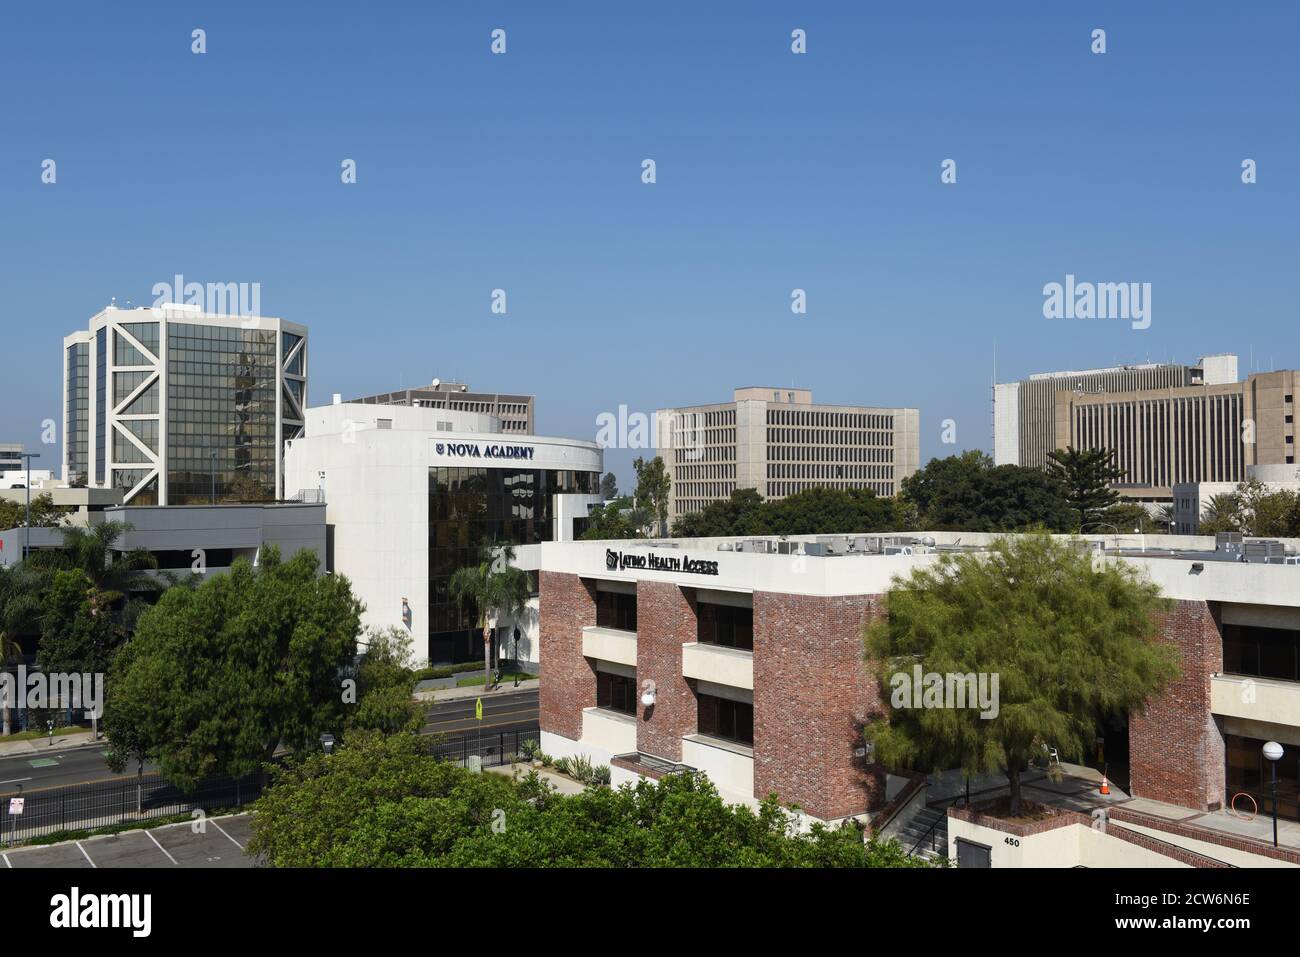 SANTA ANA, CALIFORNIA - 23 SEPT 2020: Nova Academy and government buildings in downtown Santa Ana. Stock Photo